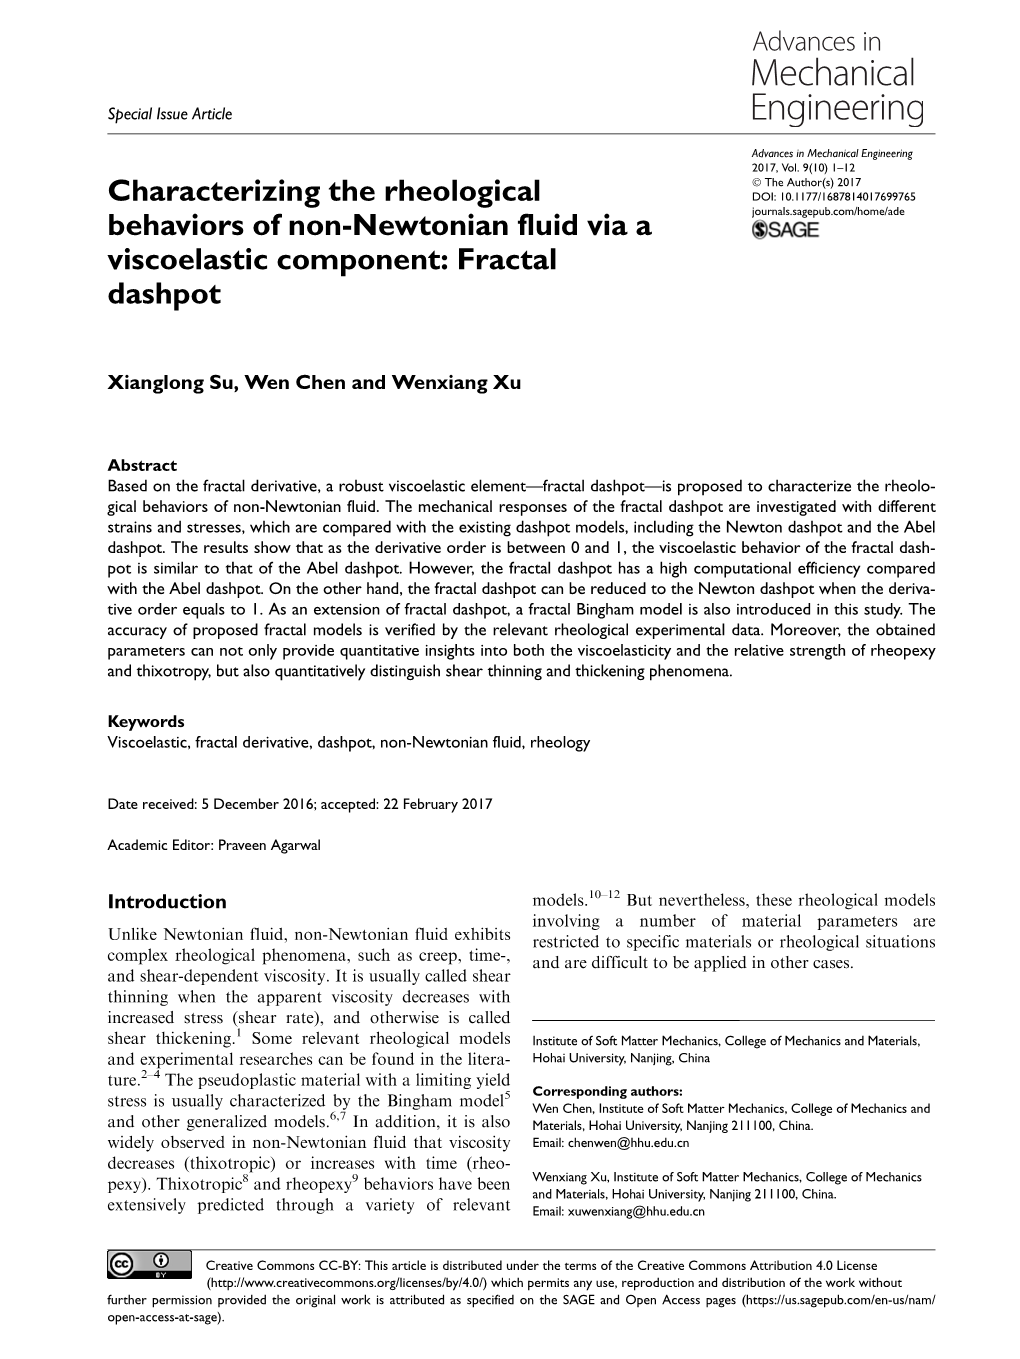 Characterizing the Rheological Behaviors of Non-Newtonian Fluid